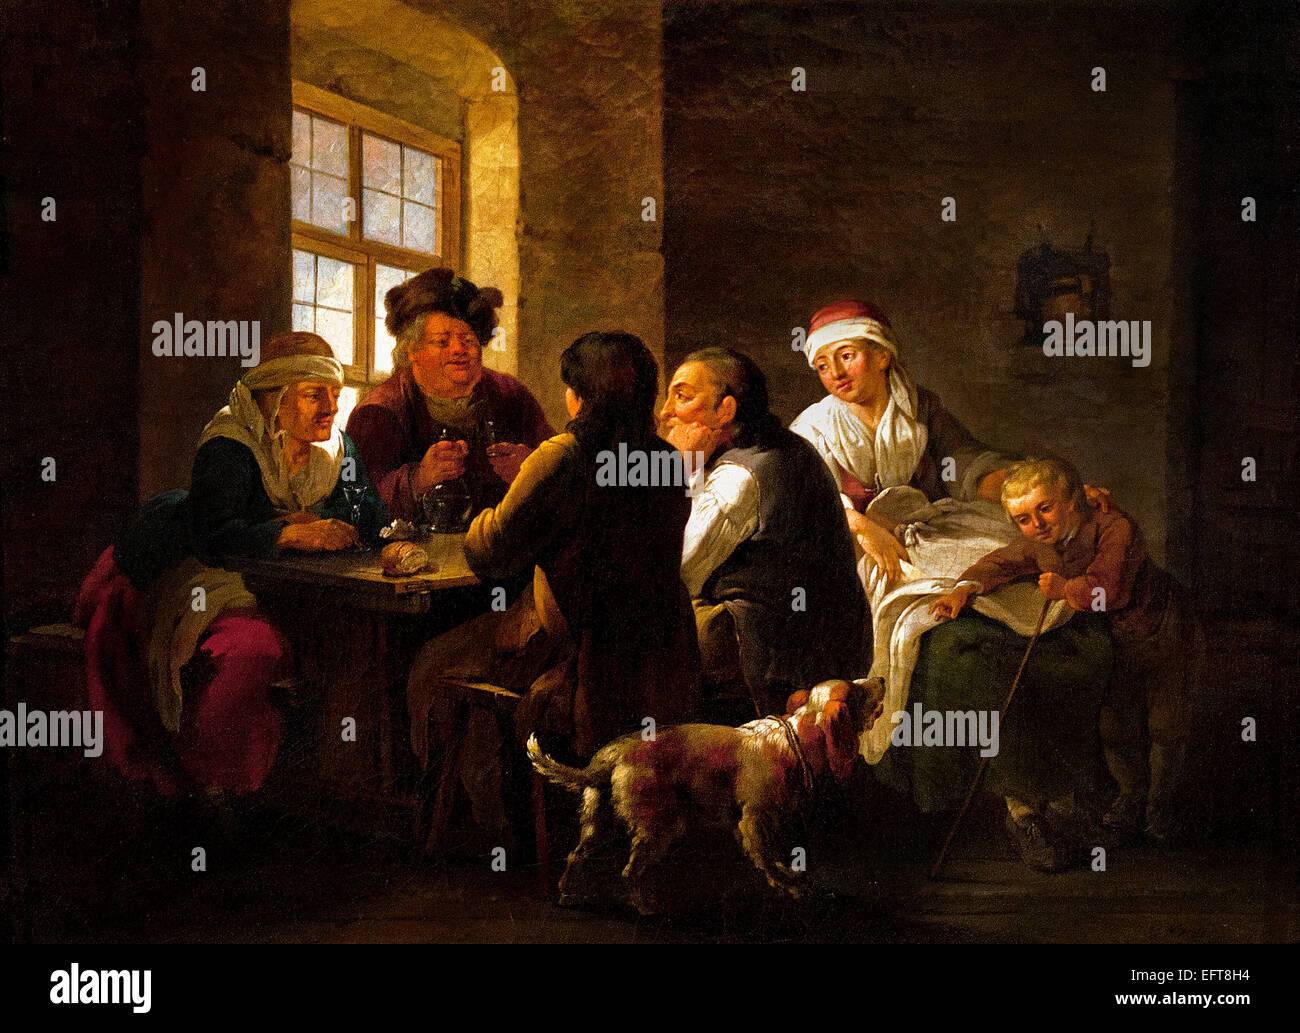 Une famille dans une taverne 1770 Georg Melchior Kraus 1737 - 1806 Allemand Allemagne Banque D'Images